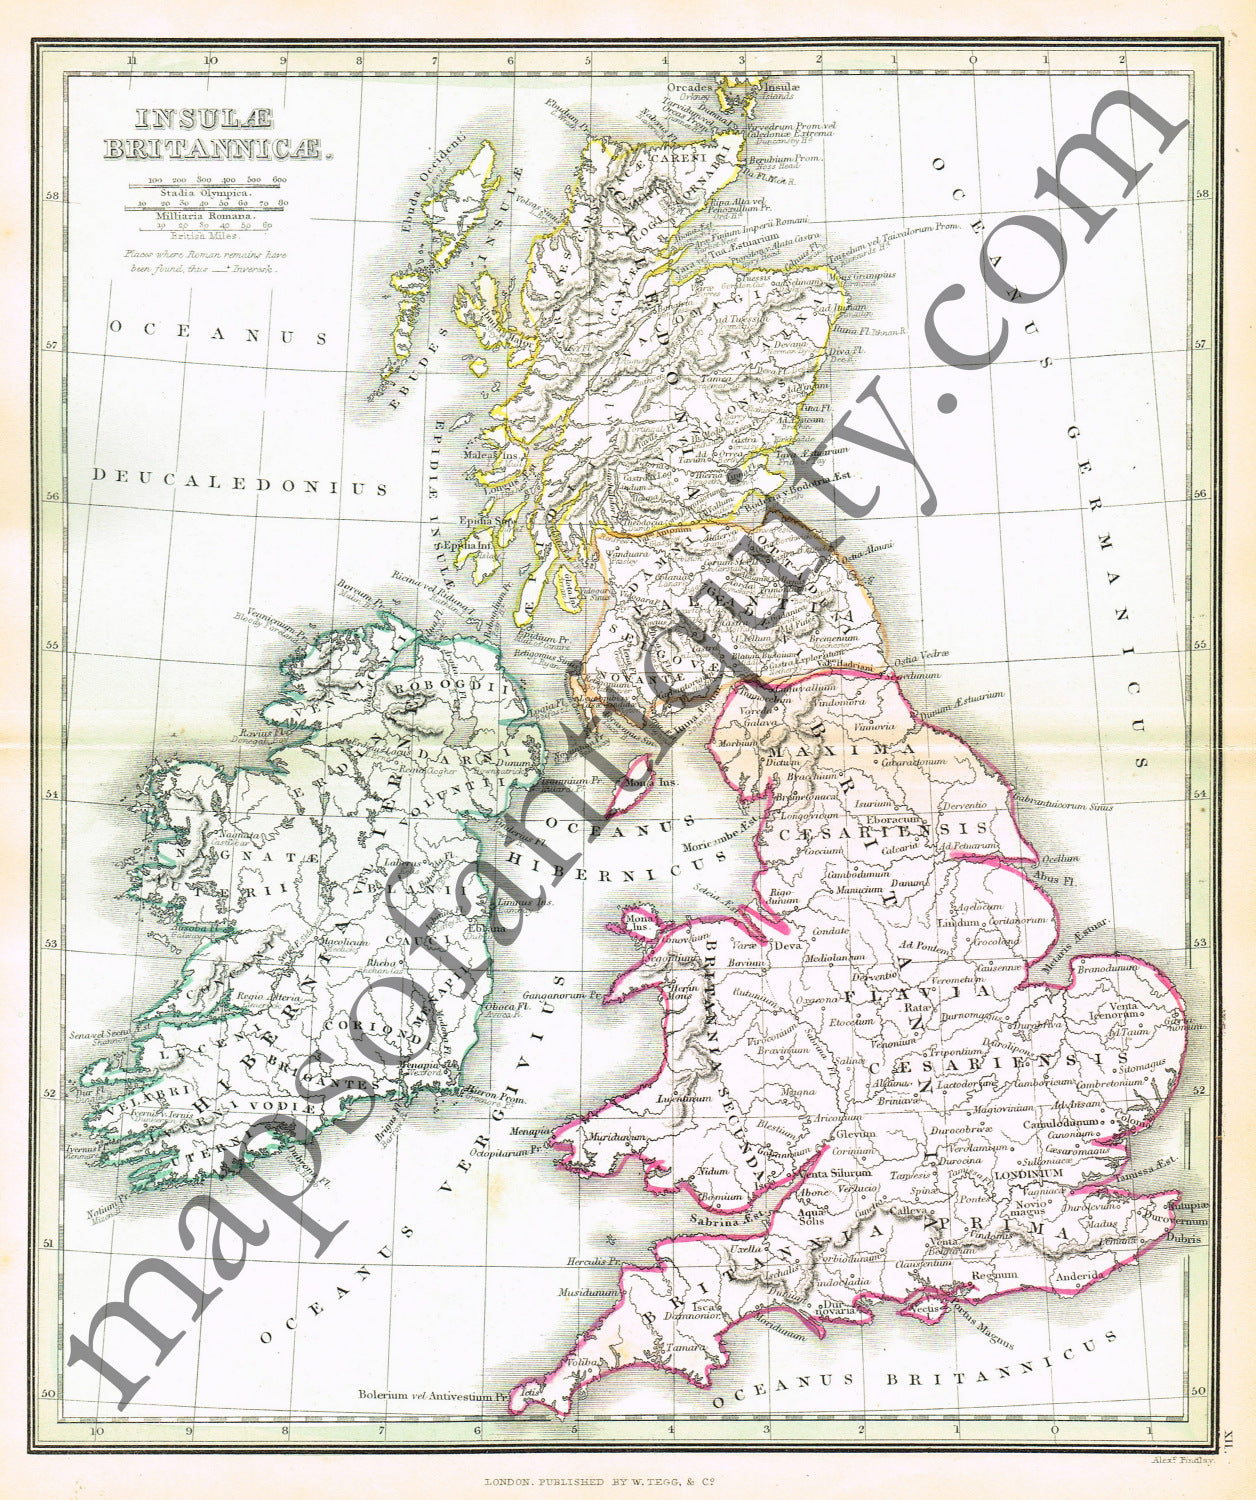 Antique-Hand-Colored-Map-Insulae-Britannicae-Europe-Ancient-World-England-Ireland-Scotland-1840-Findlay-Maps-Of-Antiquity